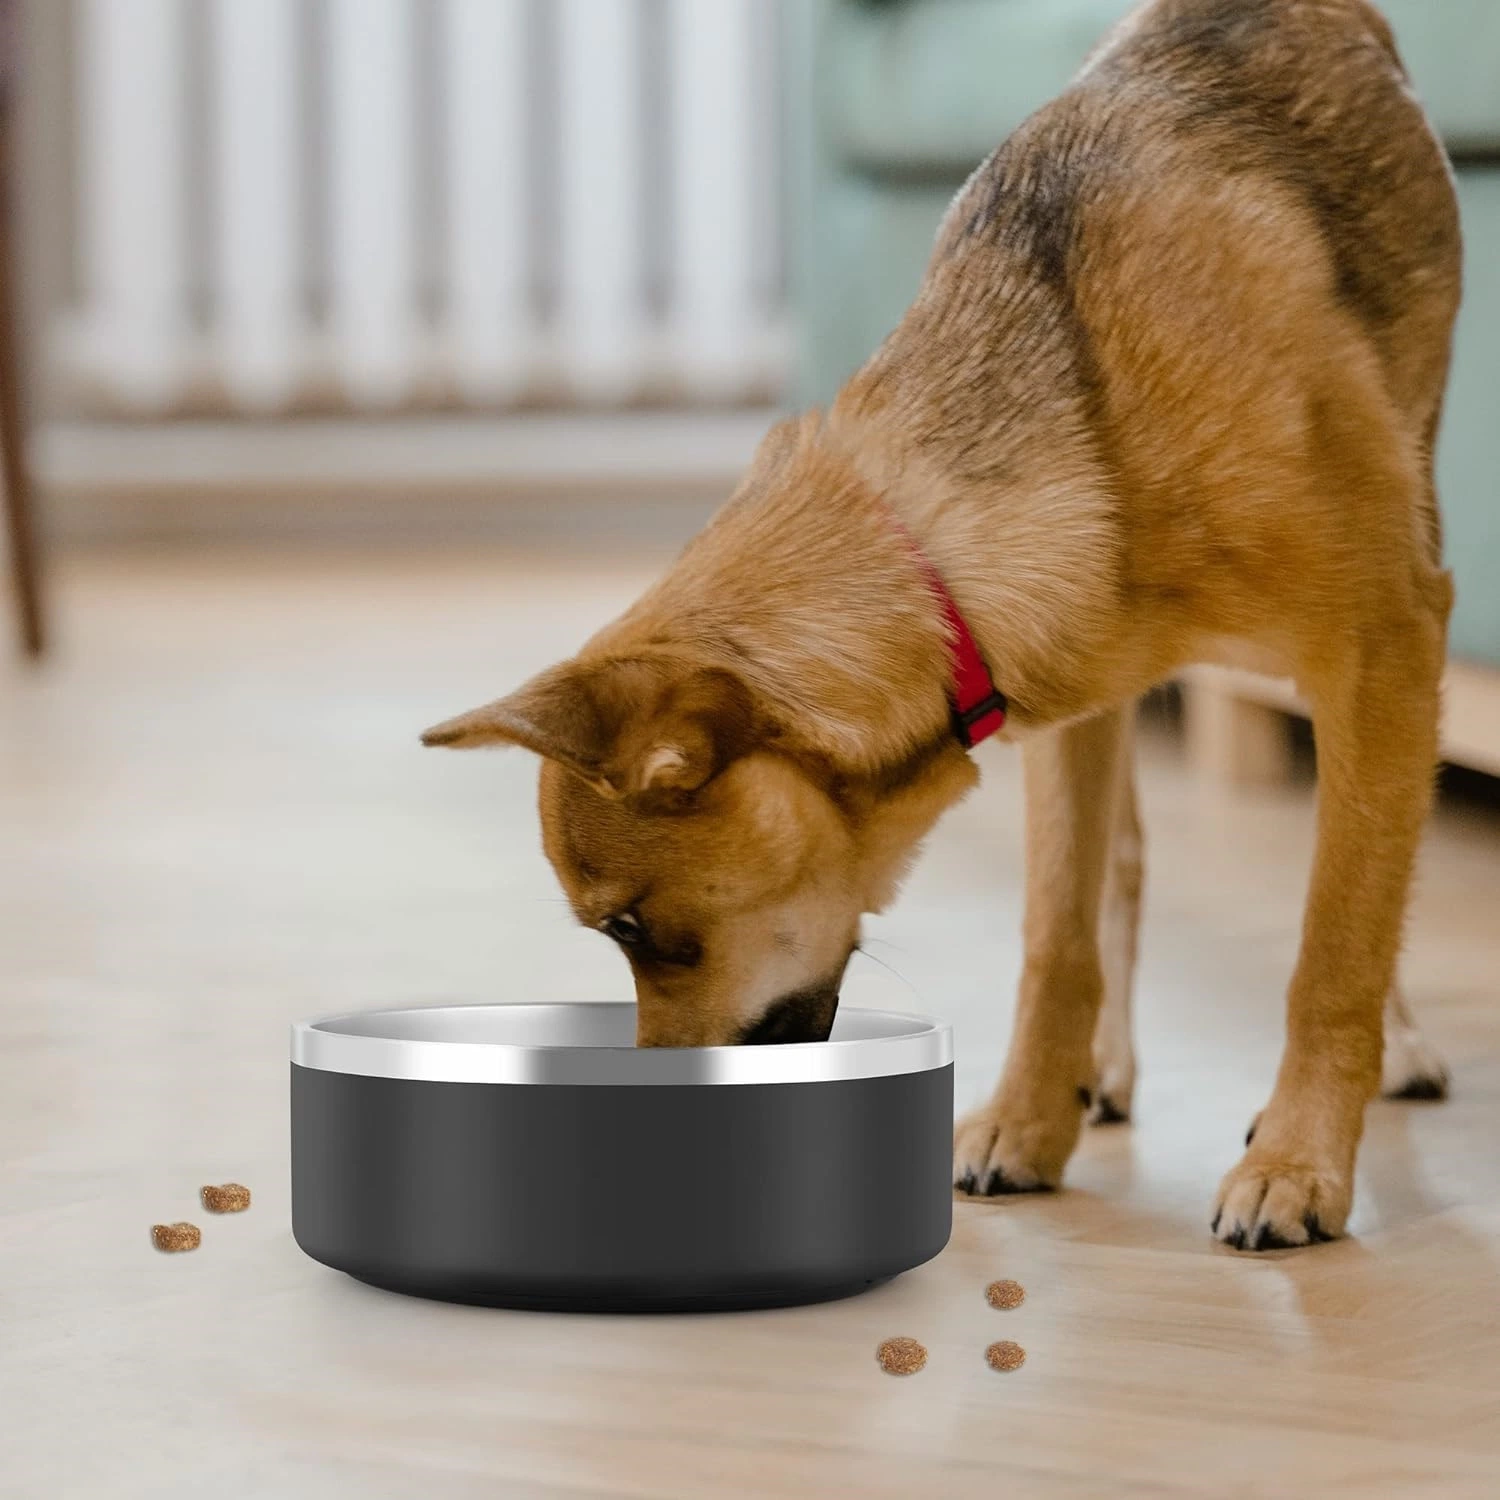 Acero inoxidable Dog Bowl Productos para mascotas aislados Accesorios alimentadores Cat Cuenca de agua